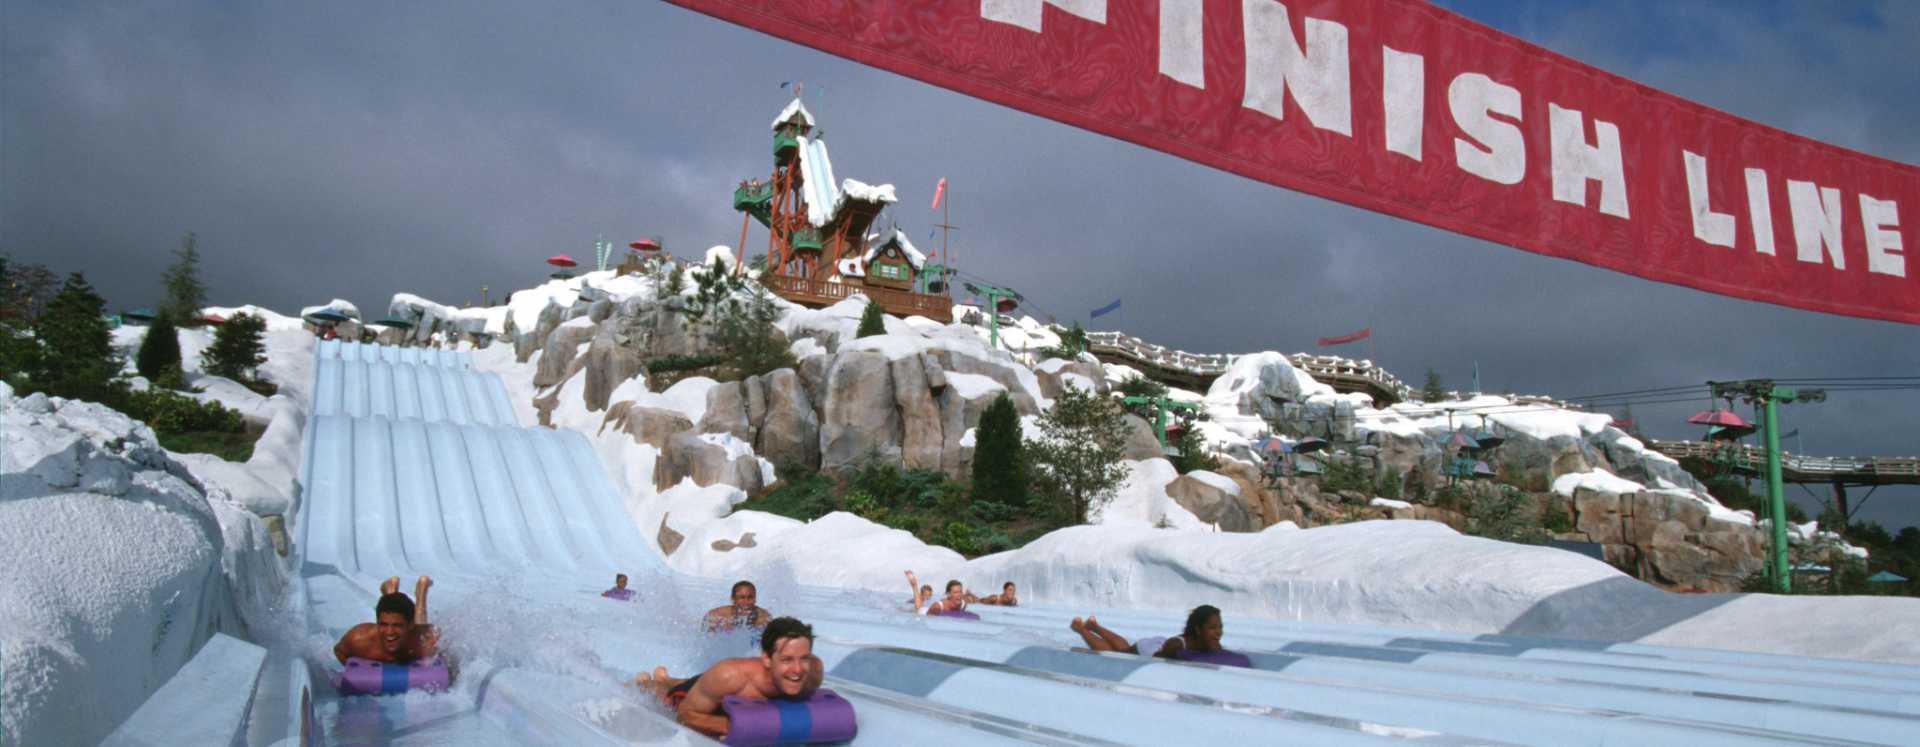 Disney's Blizzard Beach Water Park 